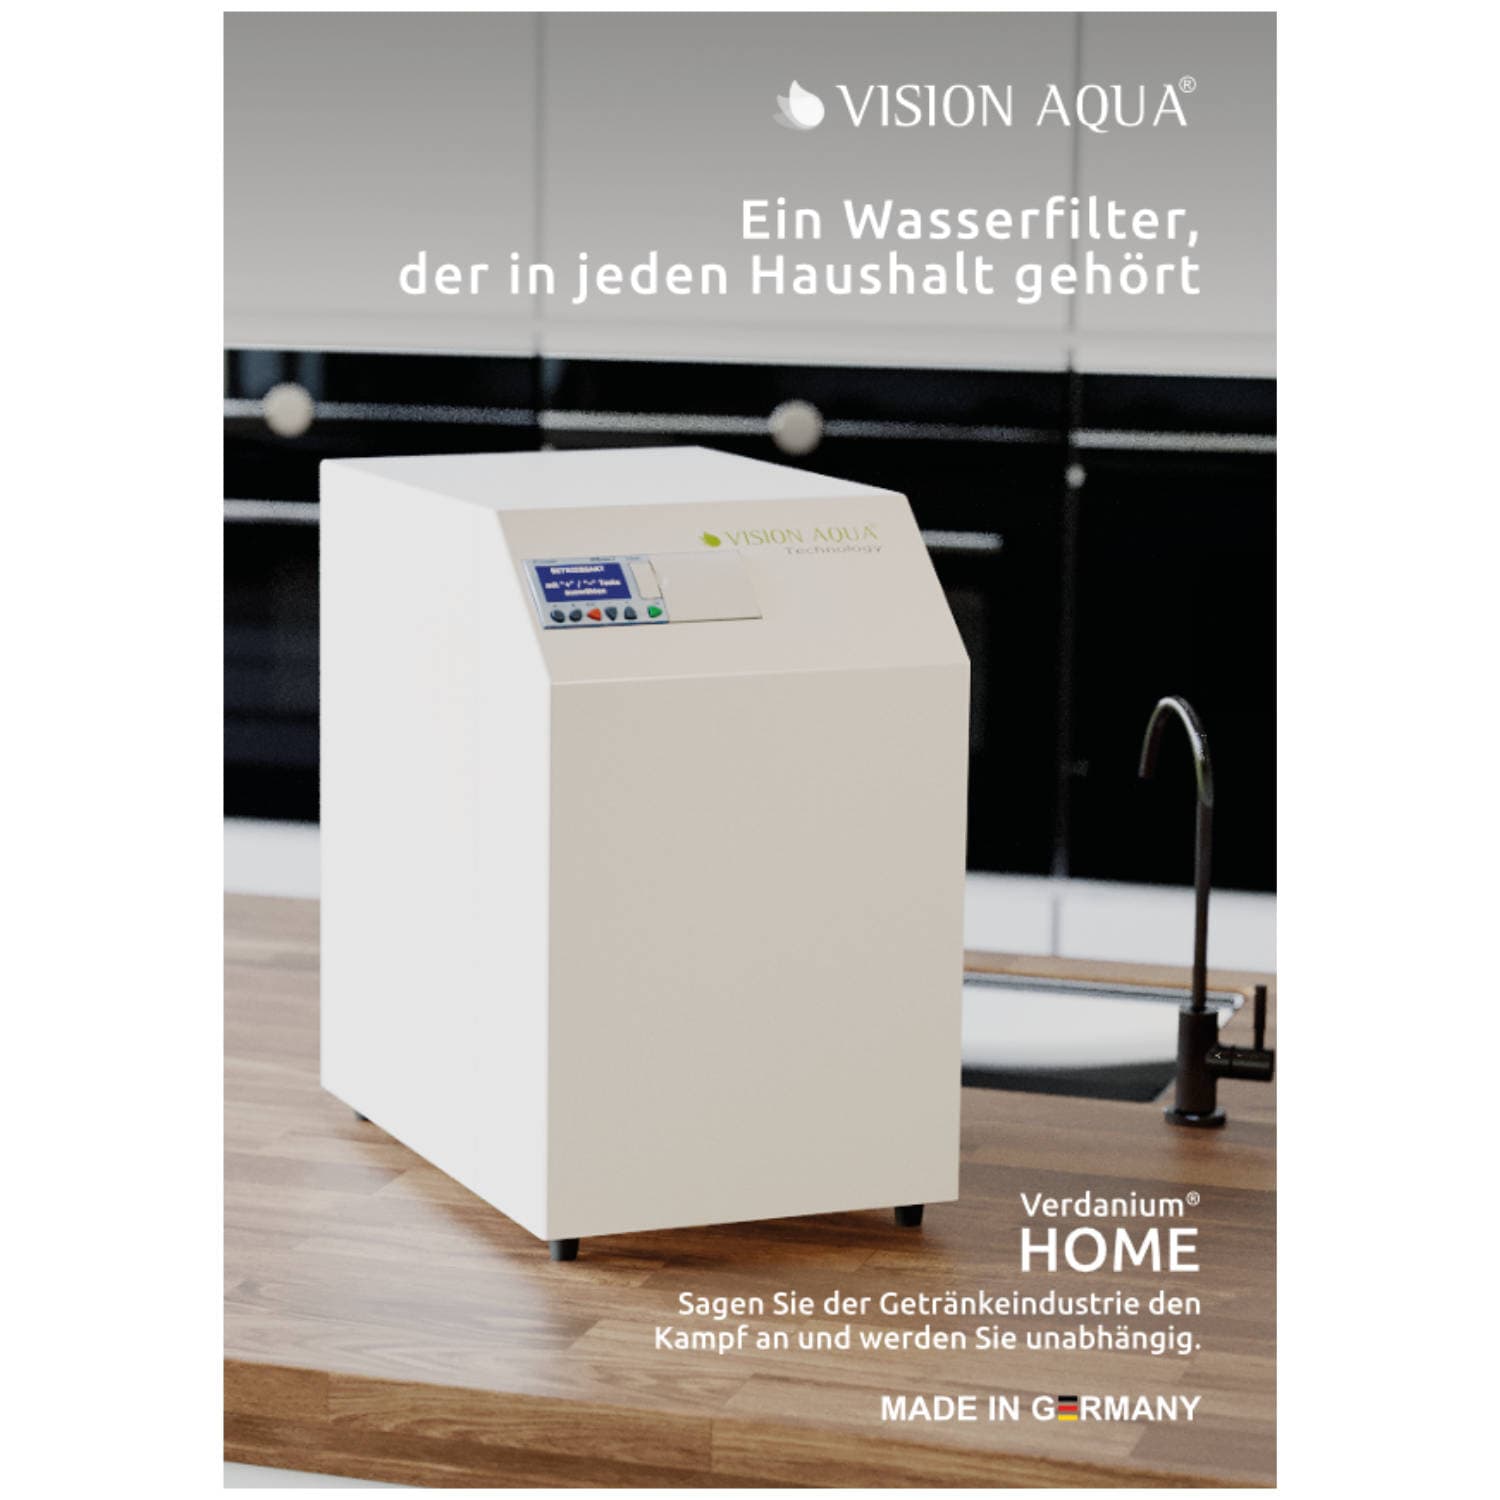 Cover der Broschüre vom VISION AQUA Wasserfilter Verdanium HOME